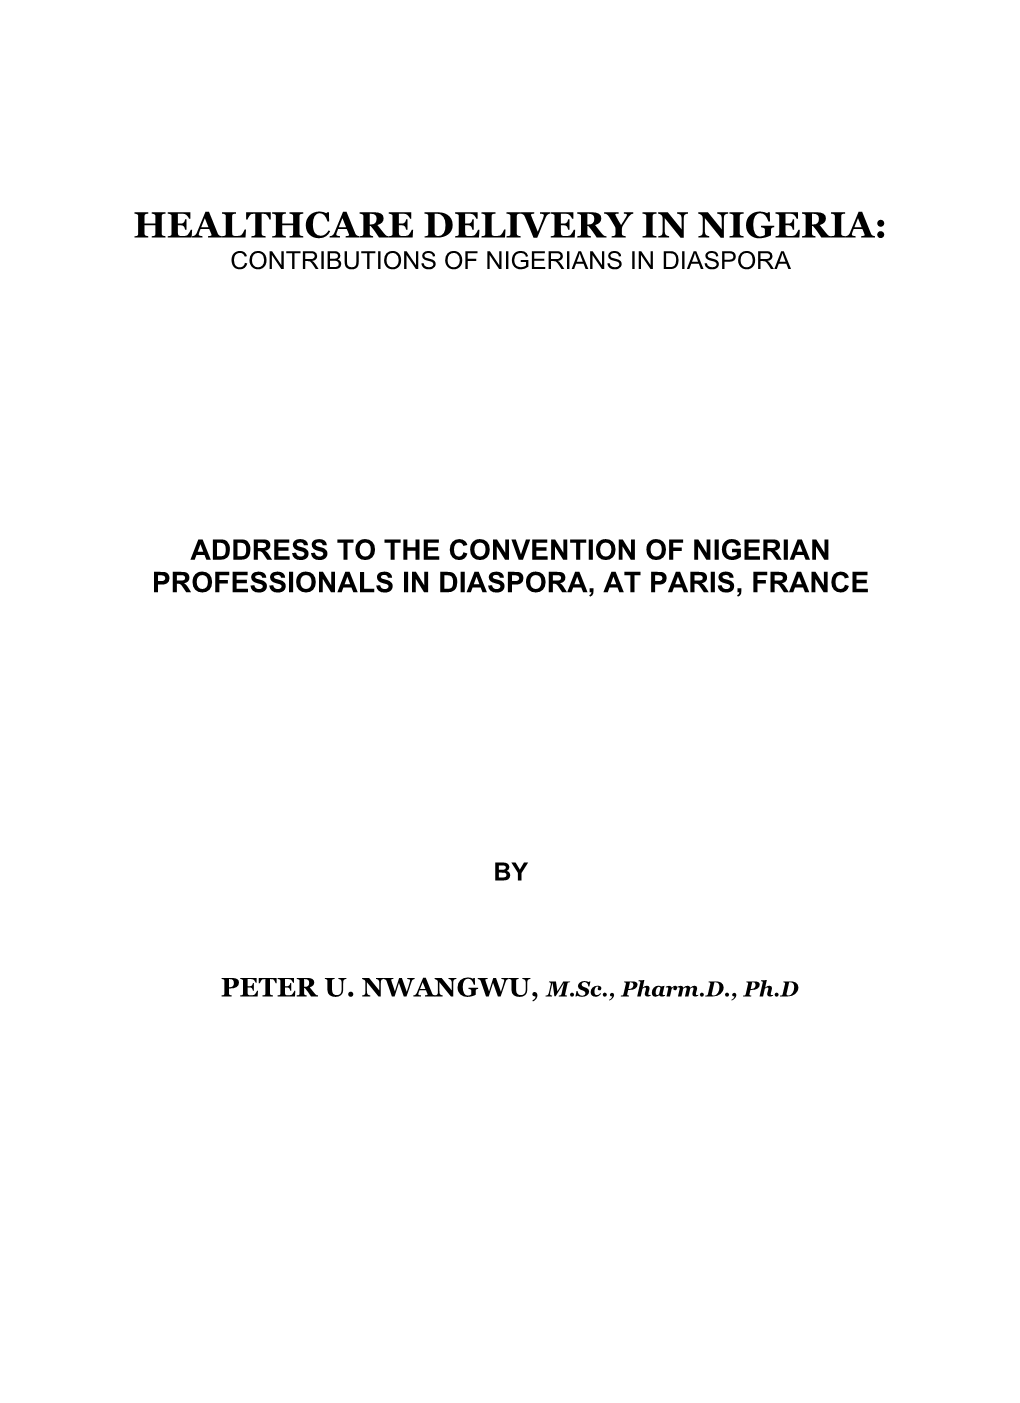 Healthcare Delivery in Nigeria